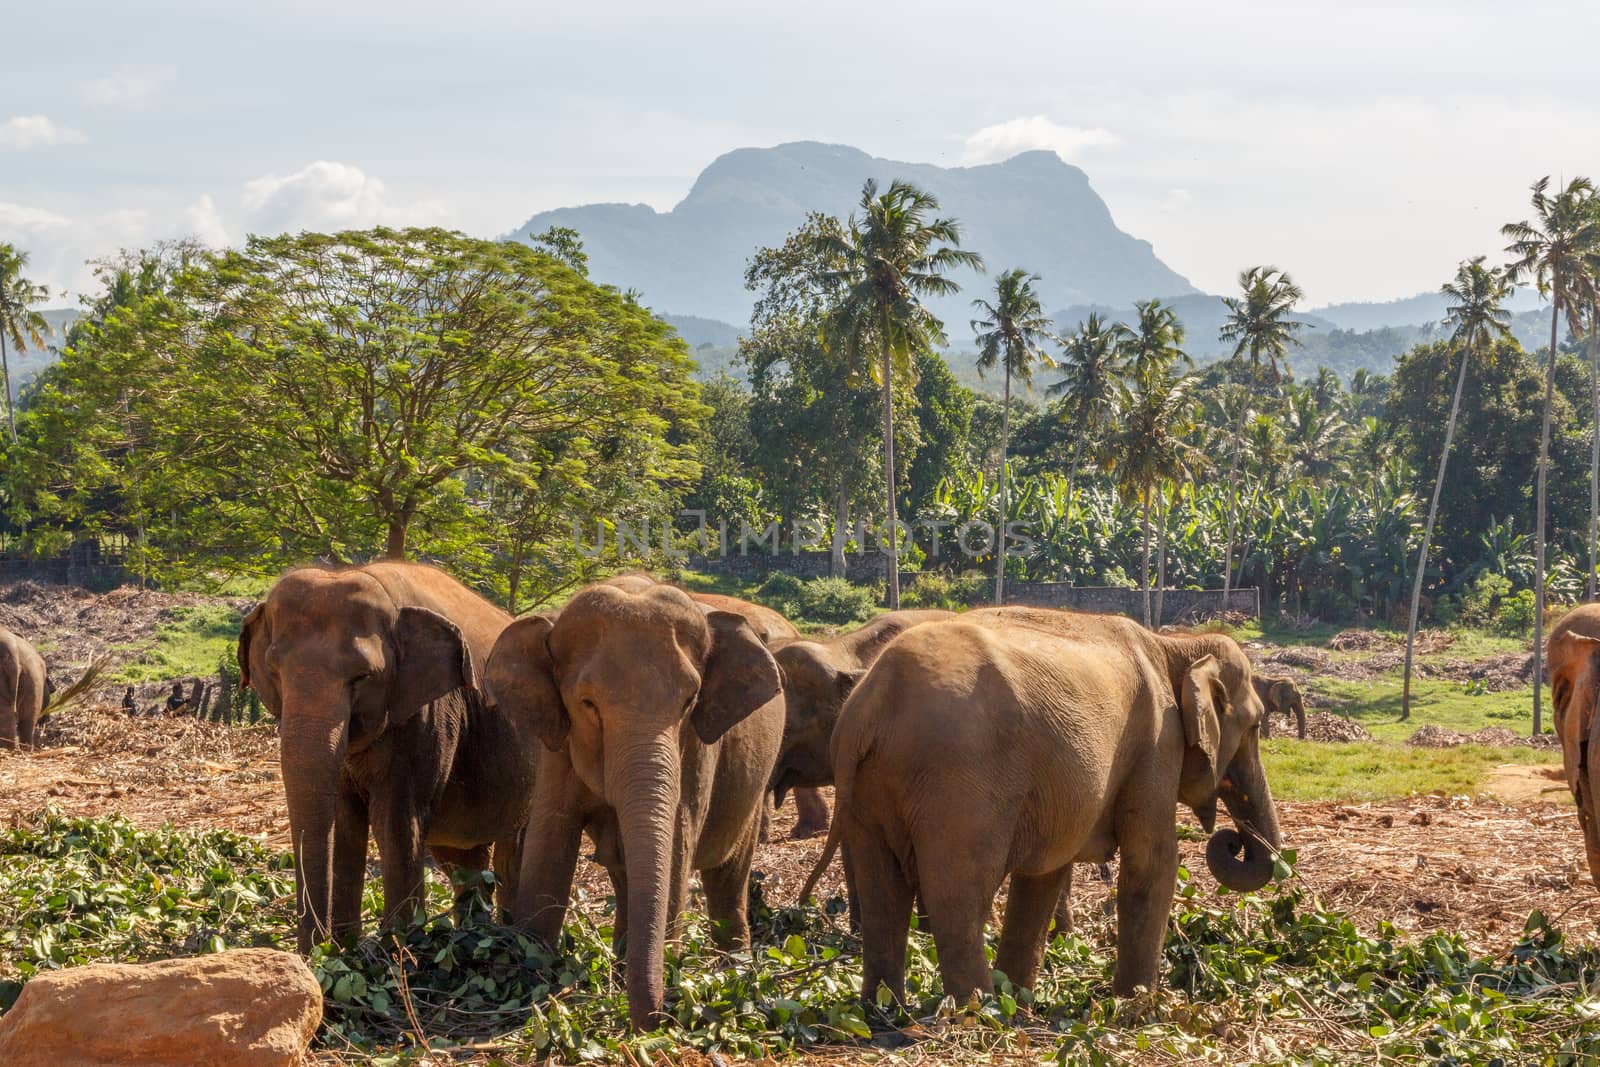 Elephant herd made up of female elephants and juvenile elephants grazing and enjoying the beautiful whether.